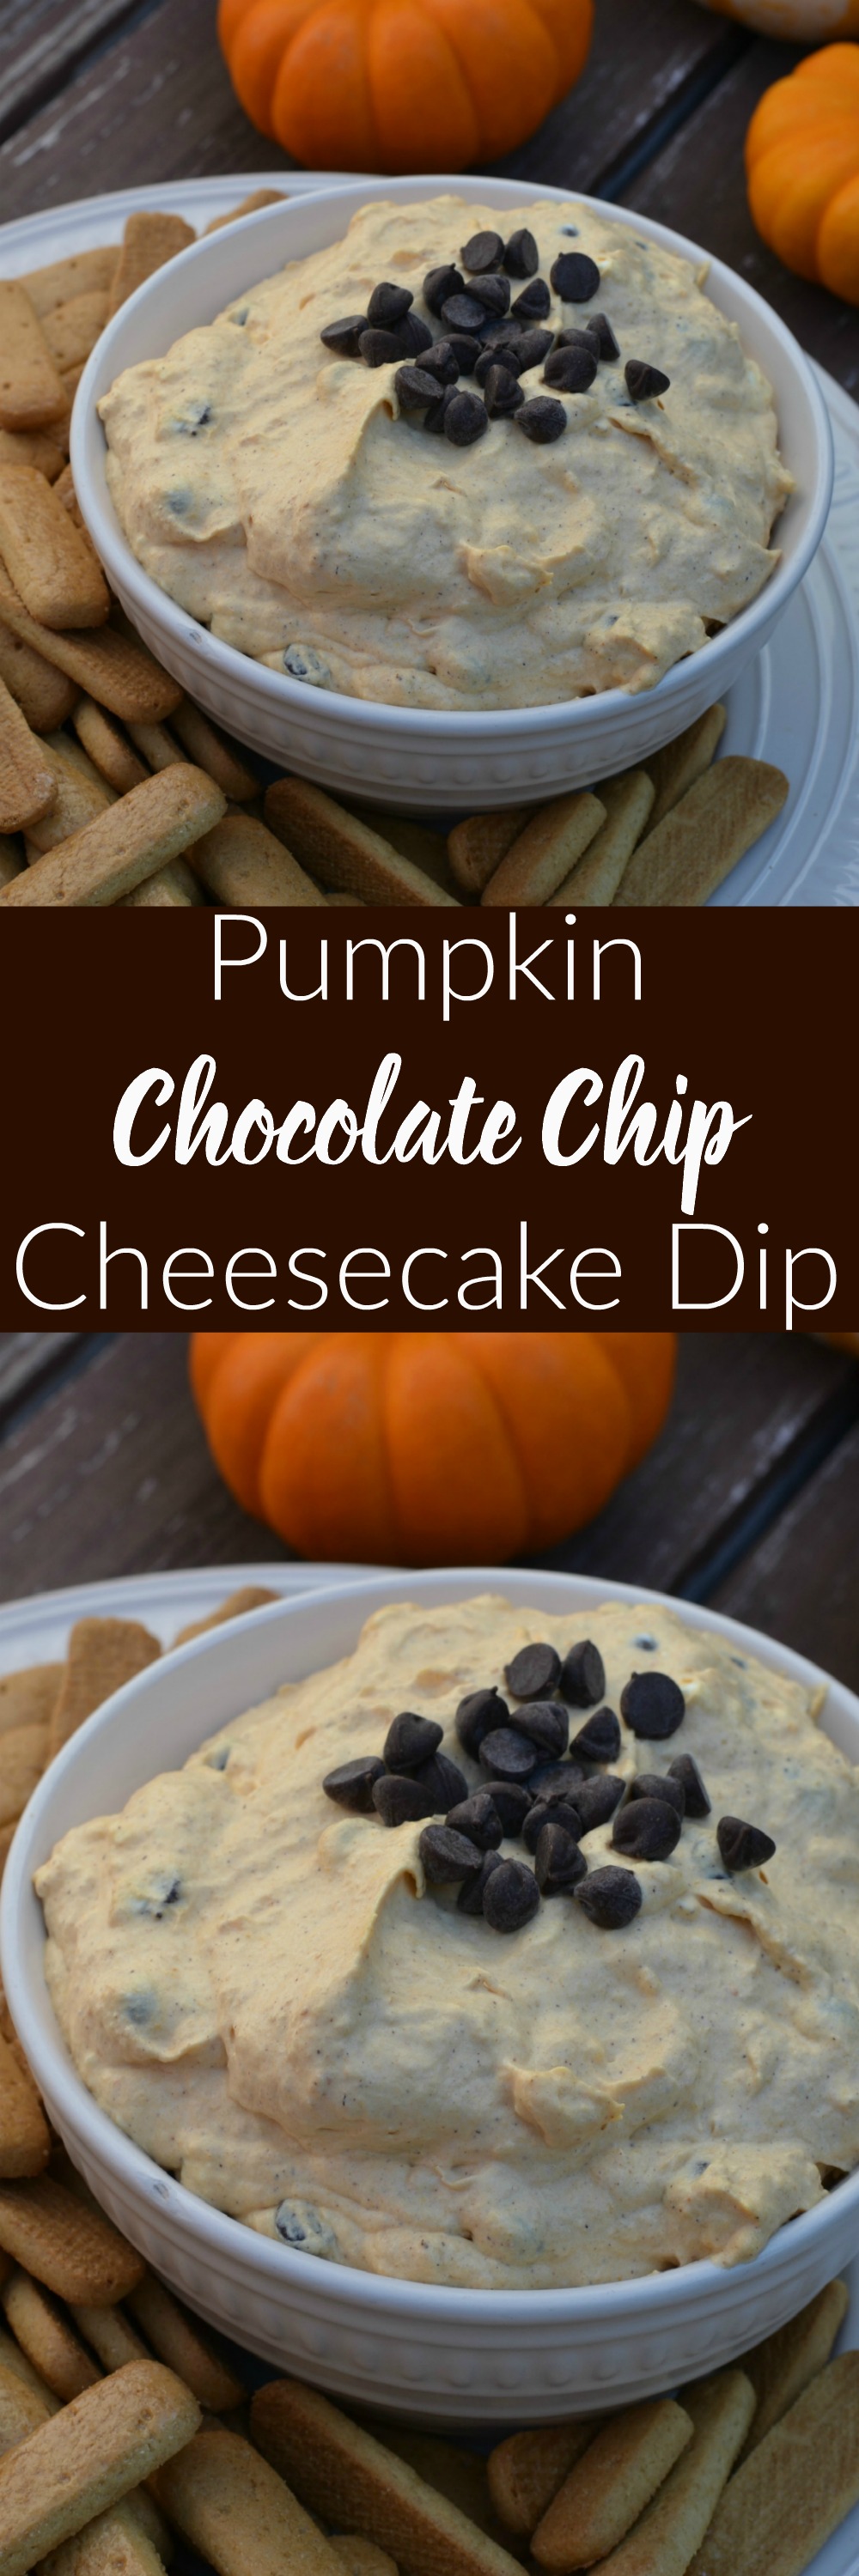 Pumpkin Chocolate Chip Cheesecake Dip